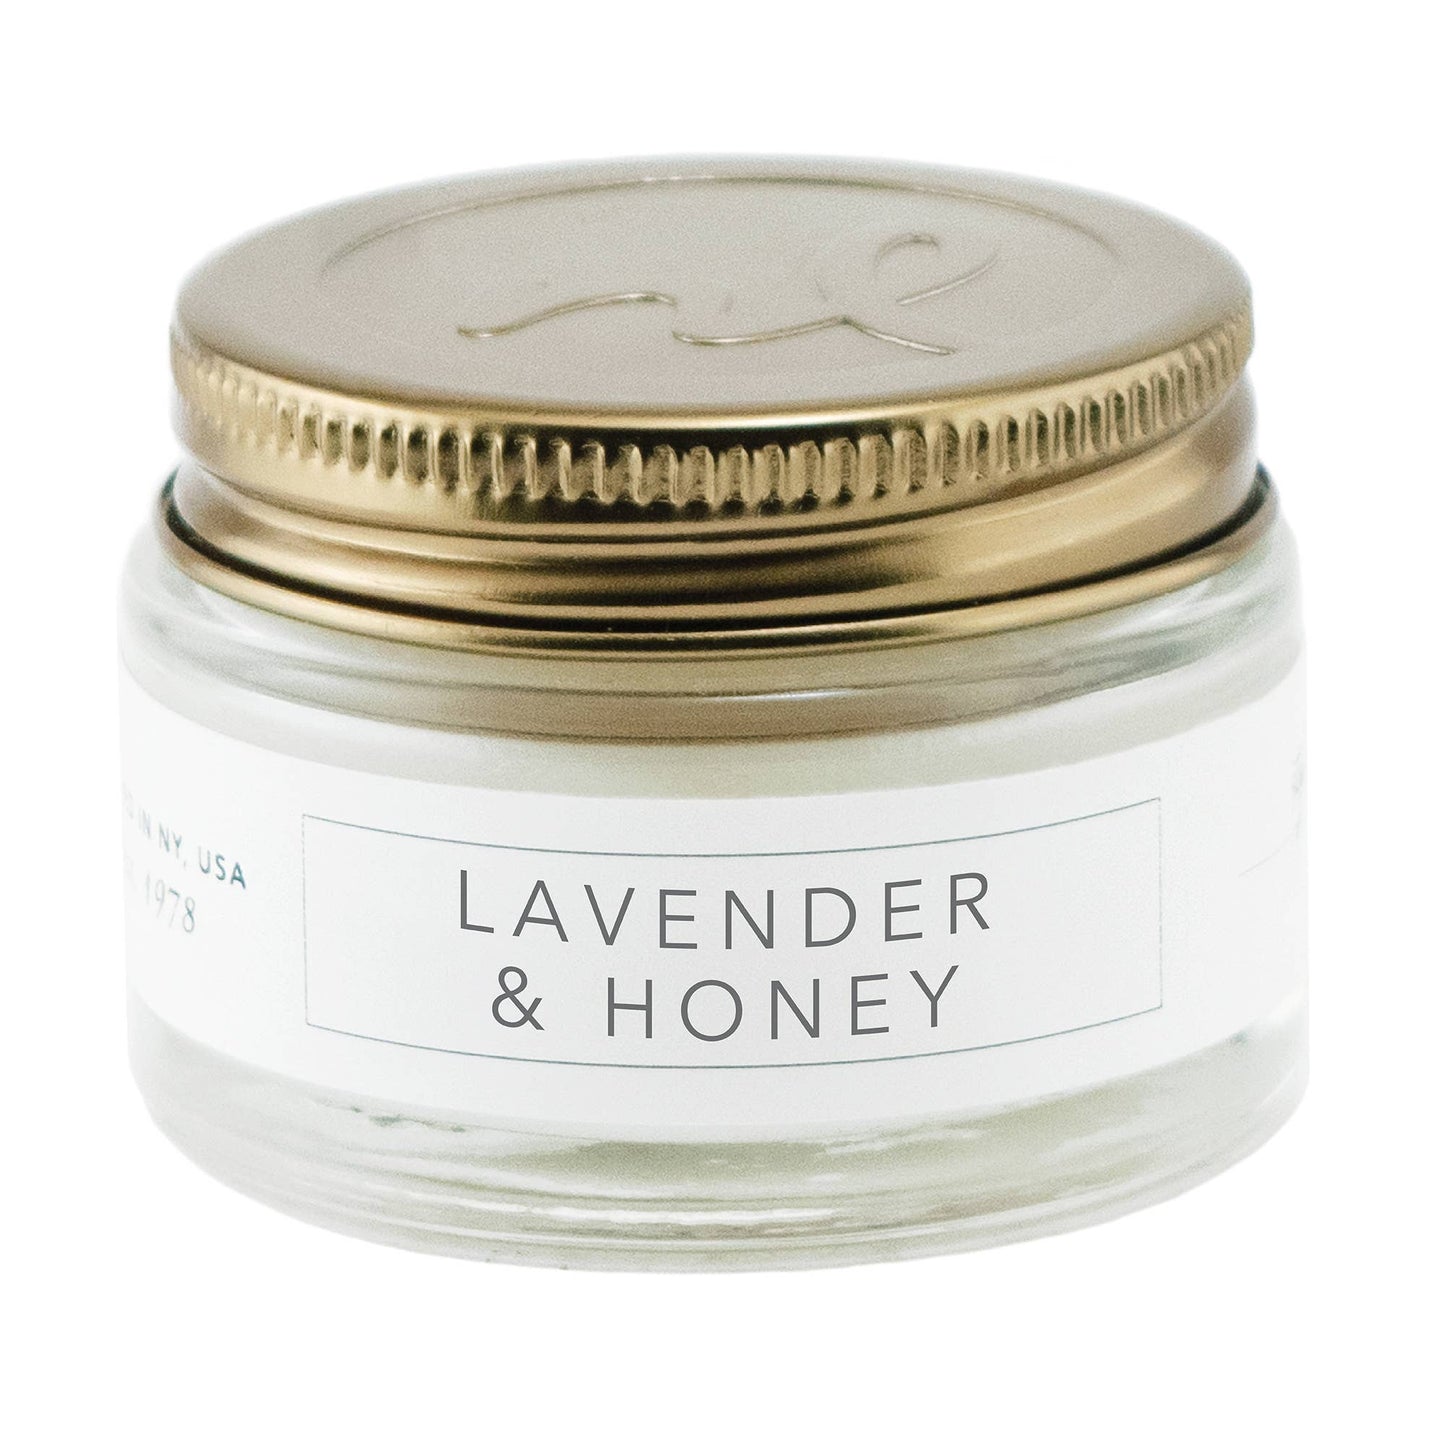 1 oz Candles: Lavender & Honey